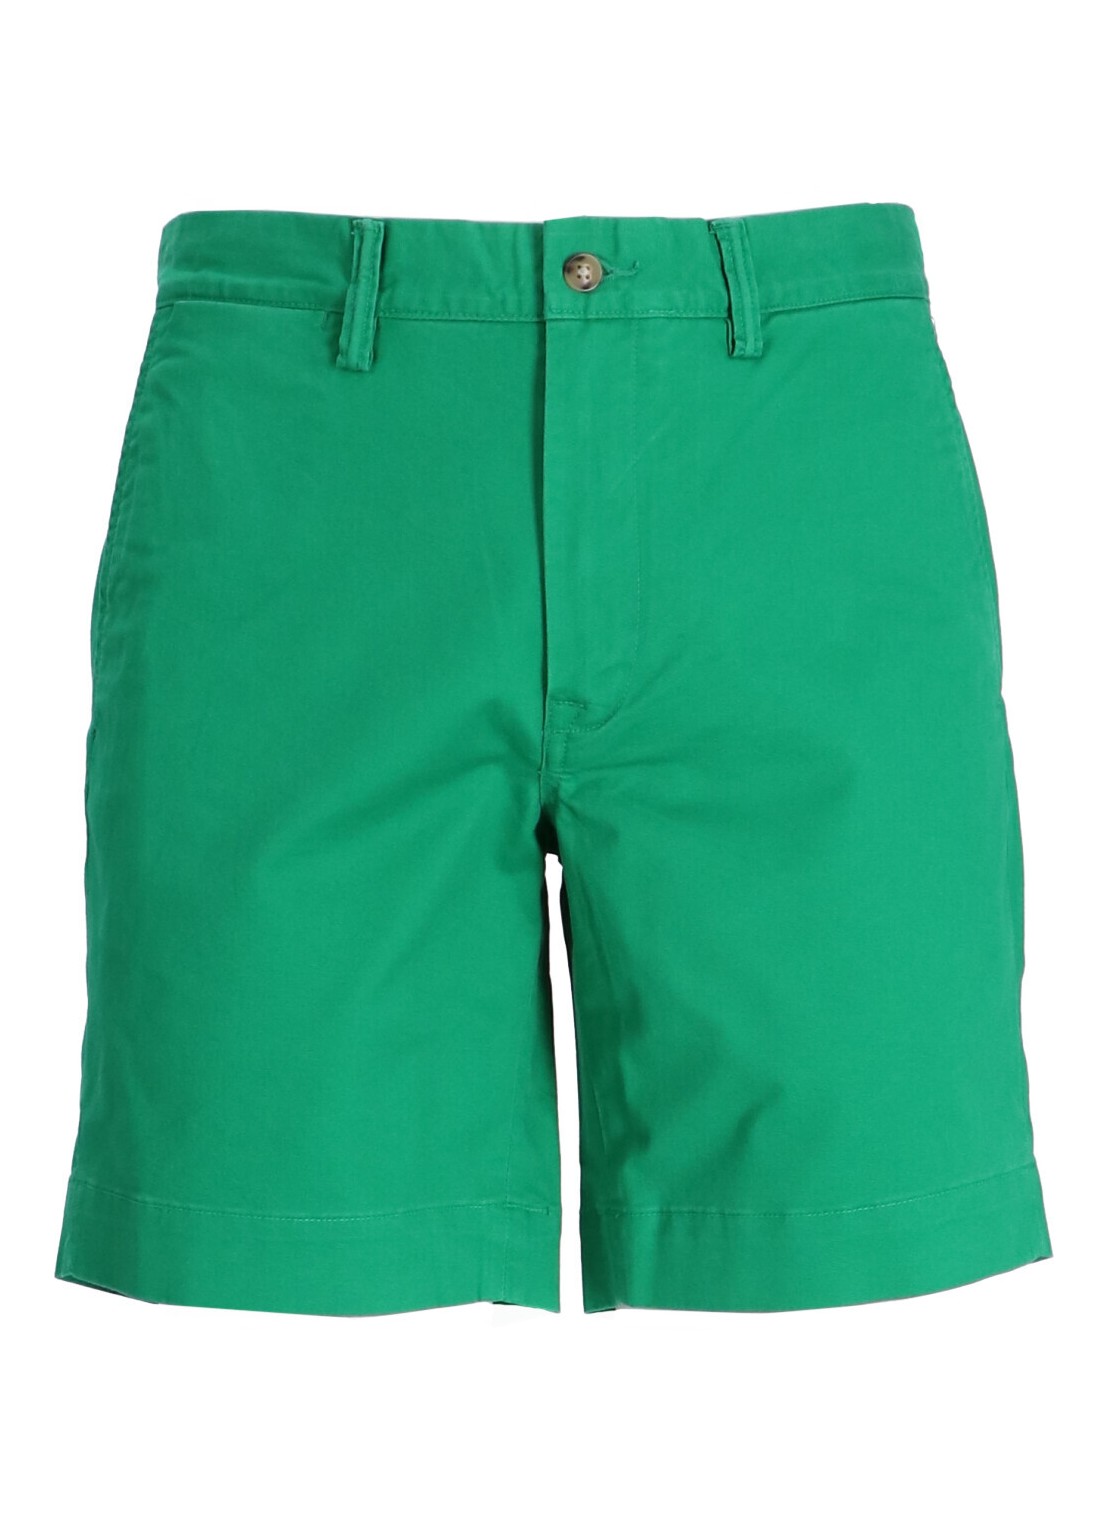 Pantalon corto polo ralph lauren short pant manstfbedford9s-flat-short - 710799213020 cruise green t